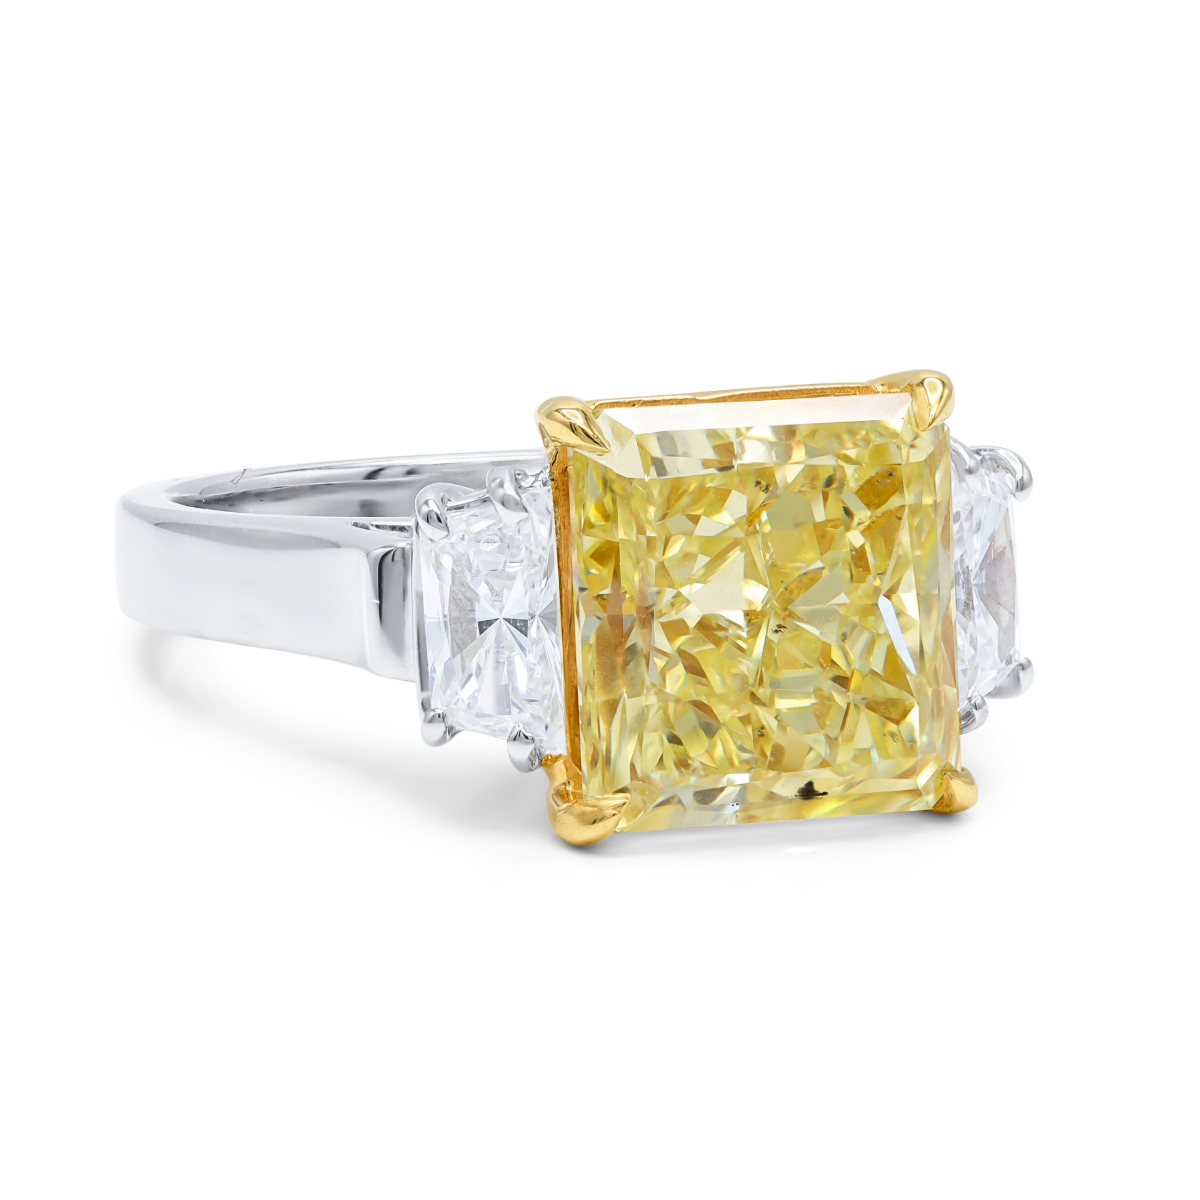 5.16ct Fancy Yellow Radiant Diamond Ring